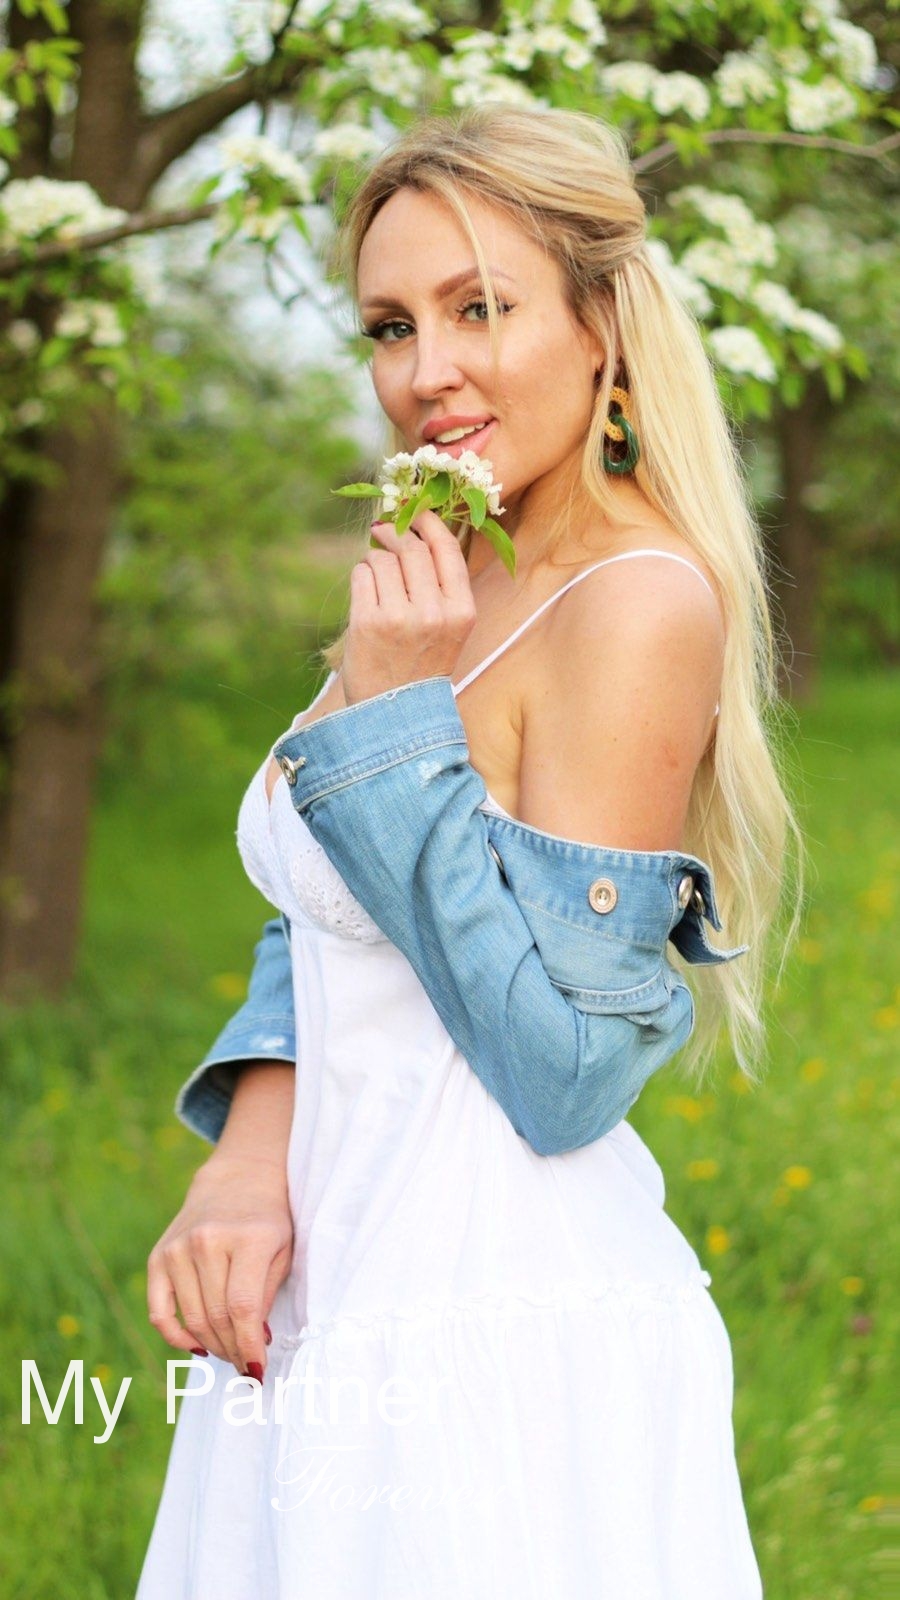 Dating with Pretty Ukrainian Woman Olga from Zaporozhye, Ukraine